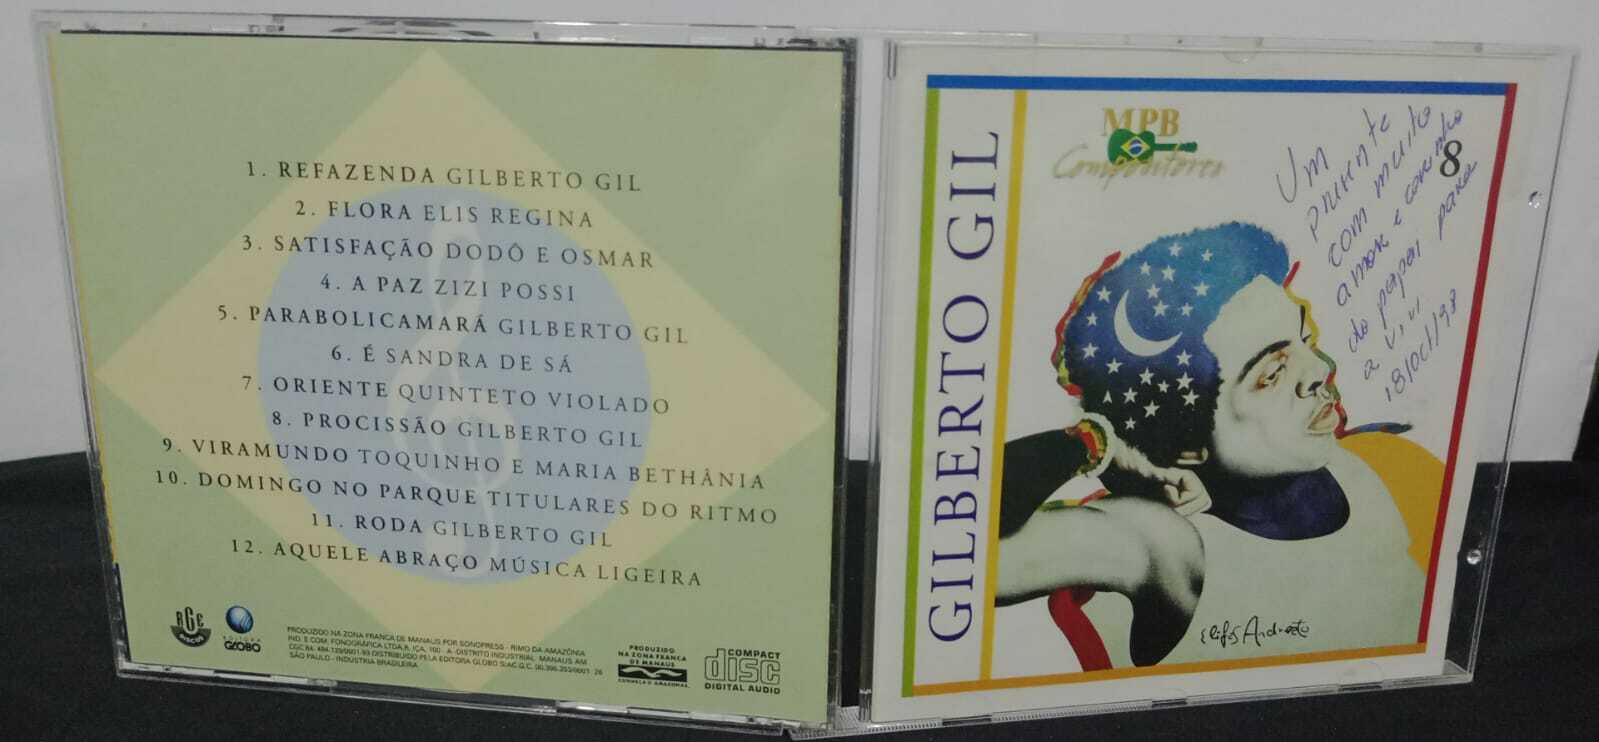 CD - Gilberto Gil - MPB Compositores